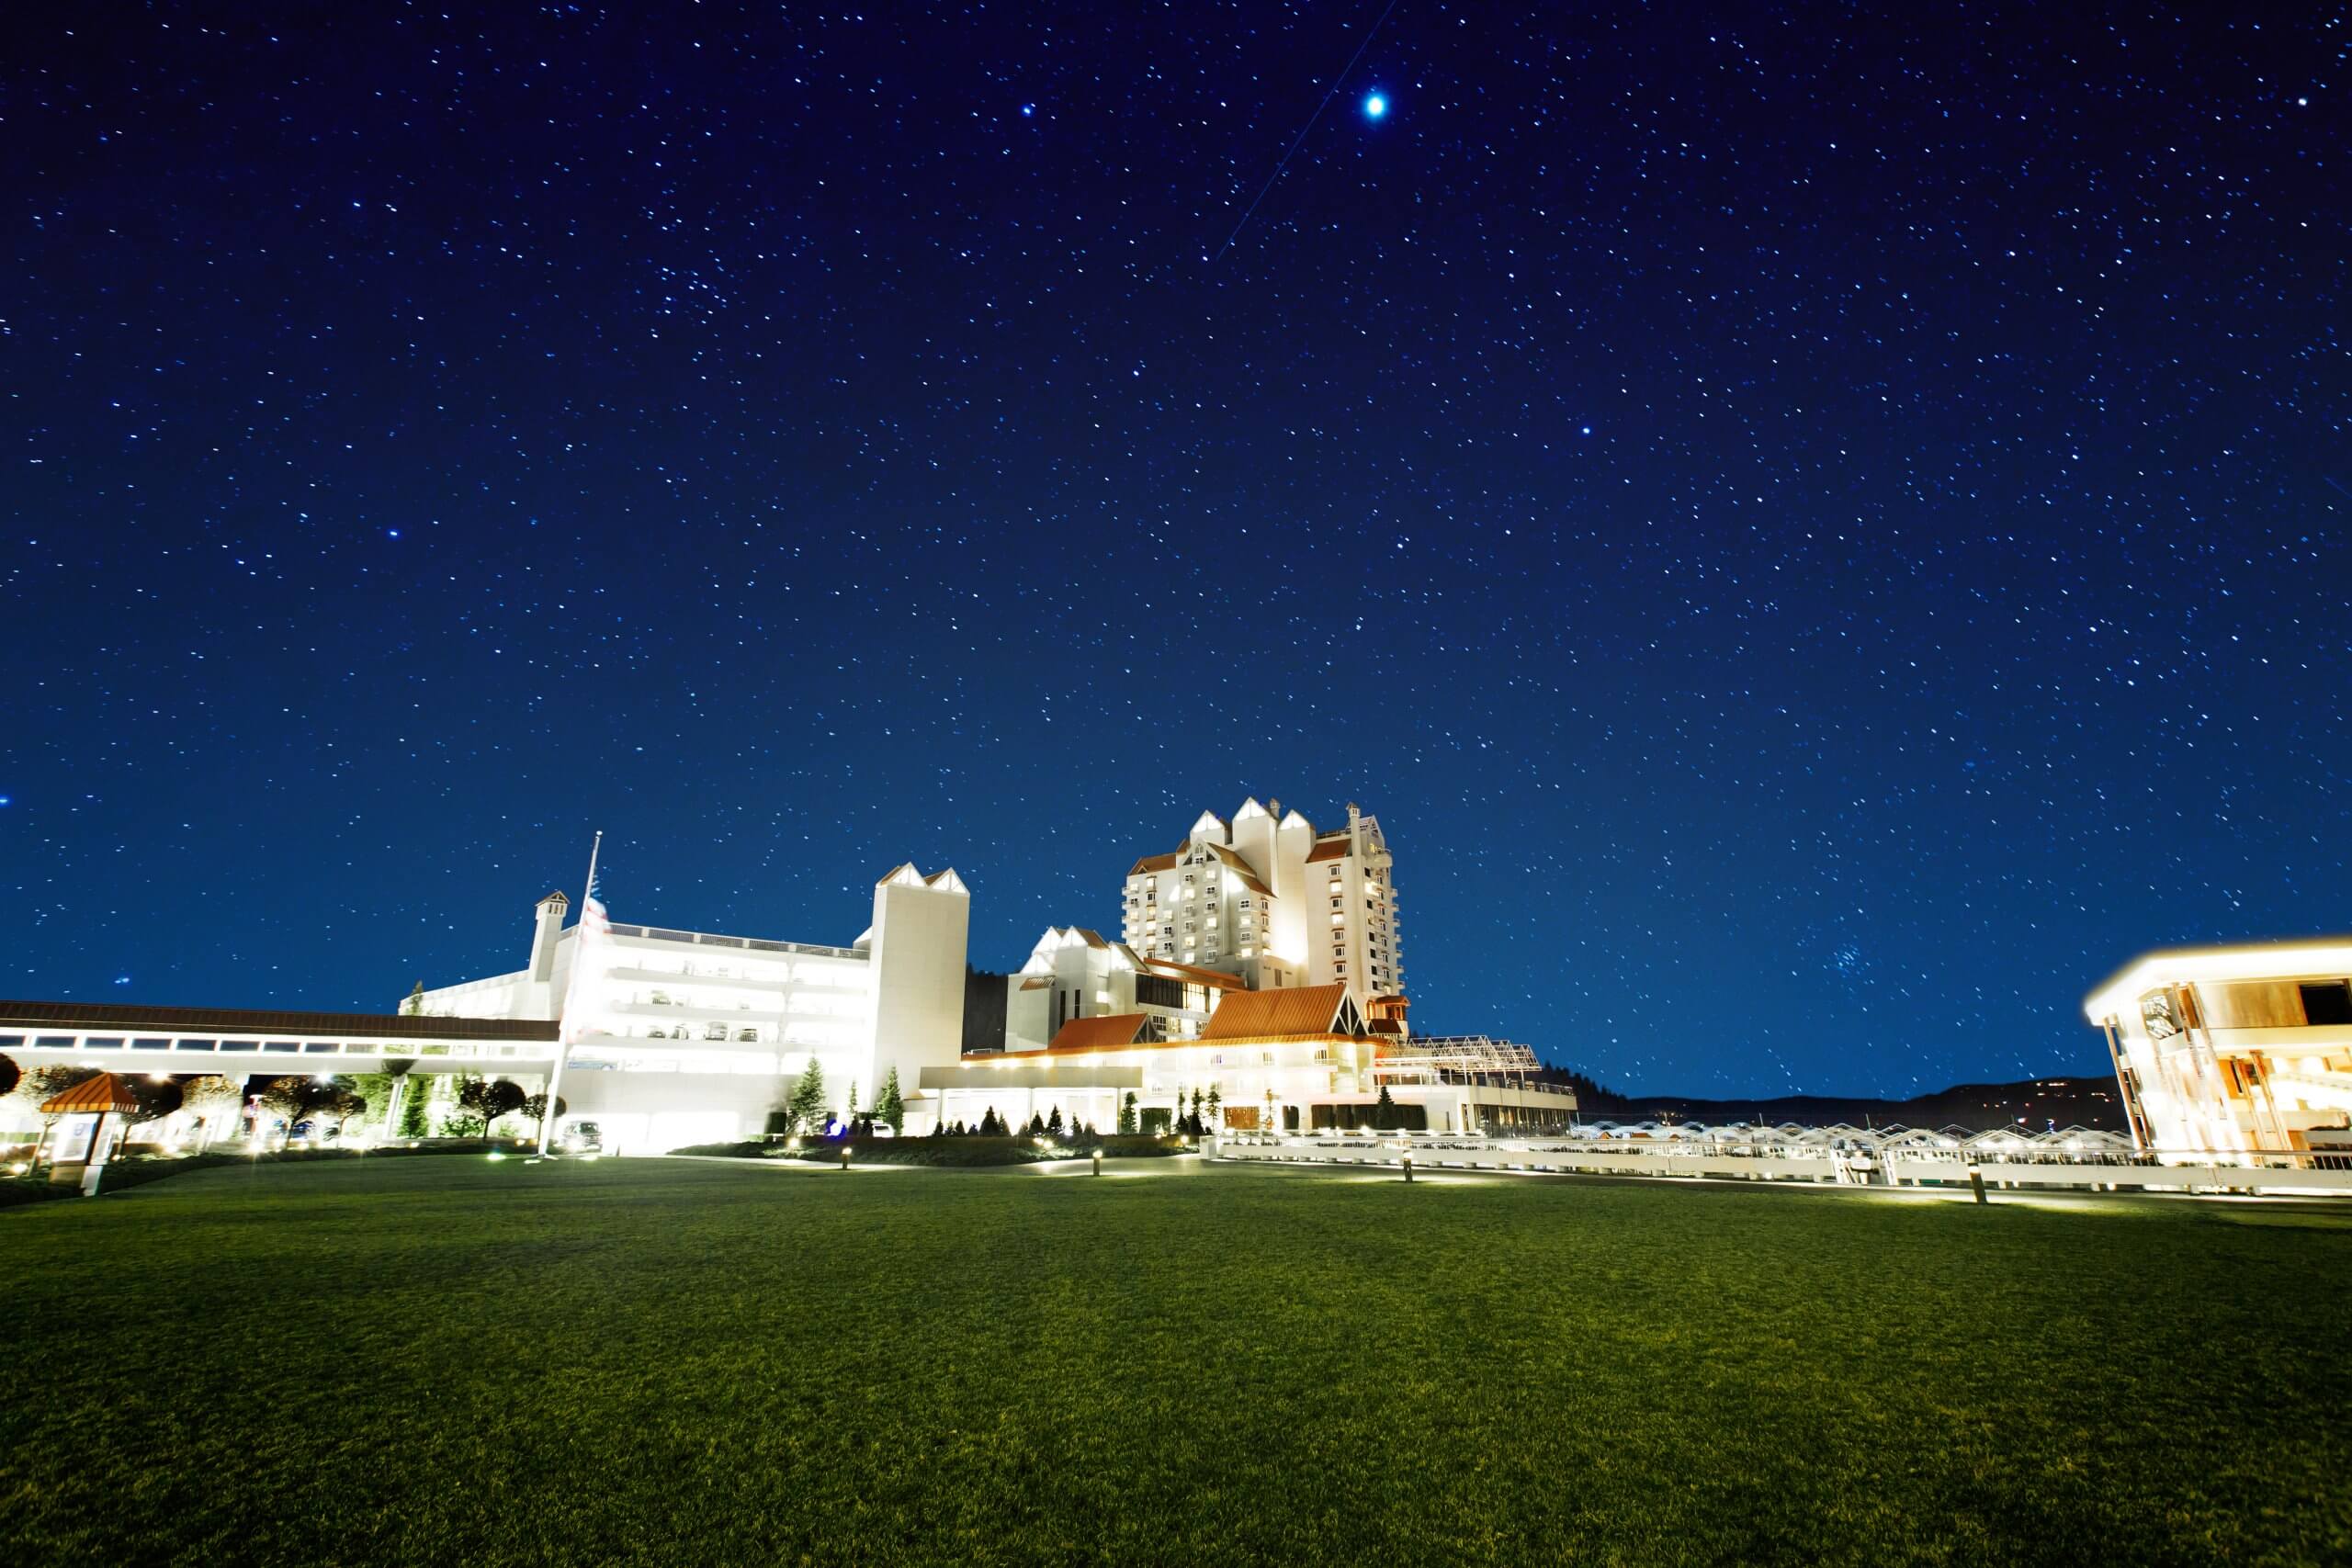 The Coeur d'Alene Resort lit up underneath a starry night sky.